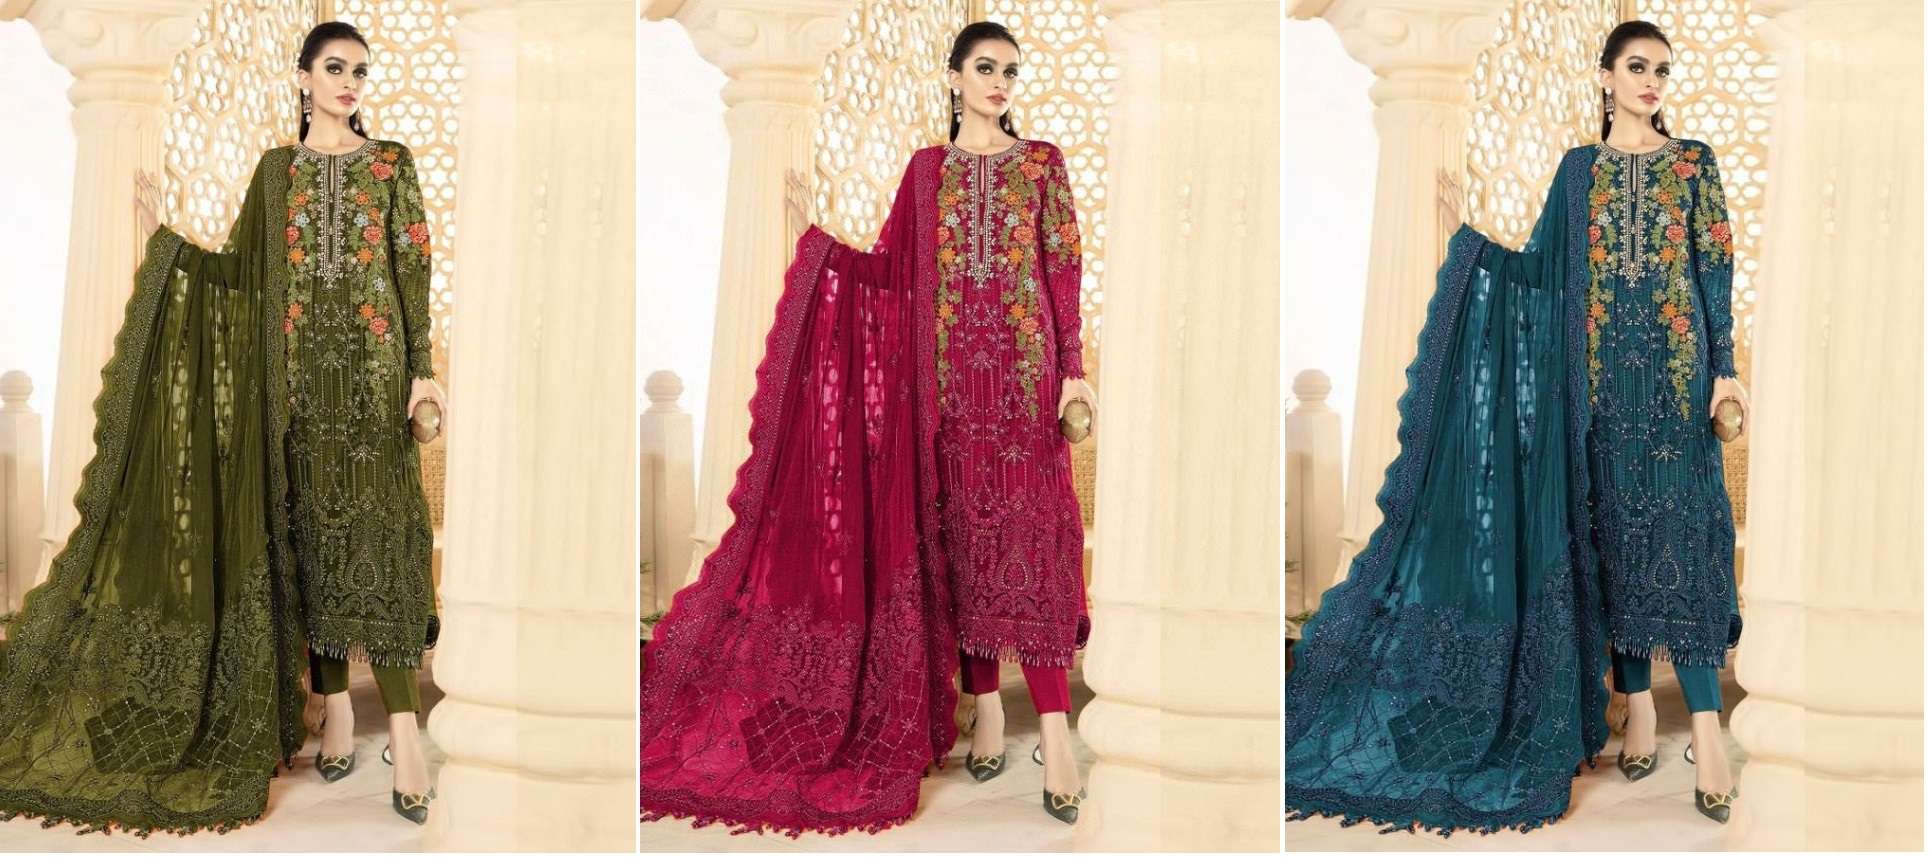 Mahnur Vol 9 Hitlist Designer Pakistani Suit Wholesale catalog